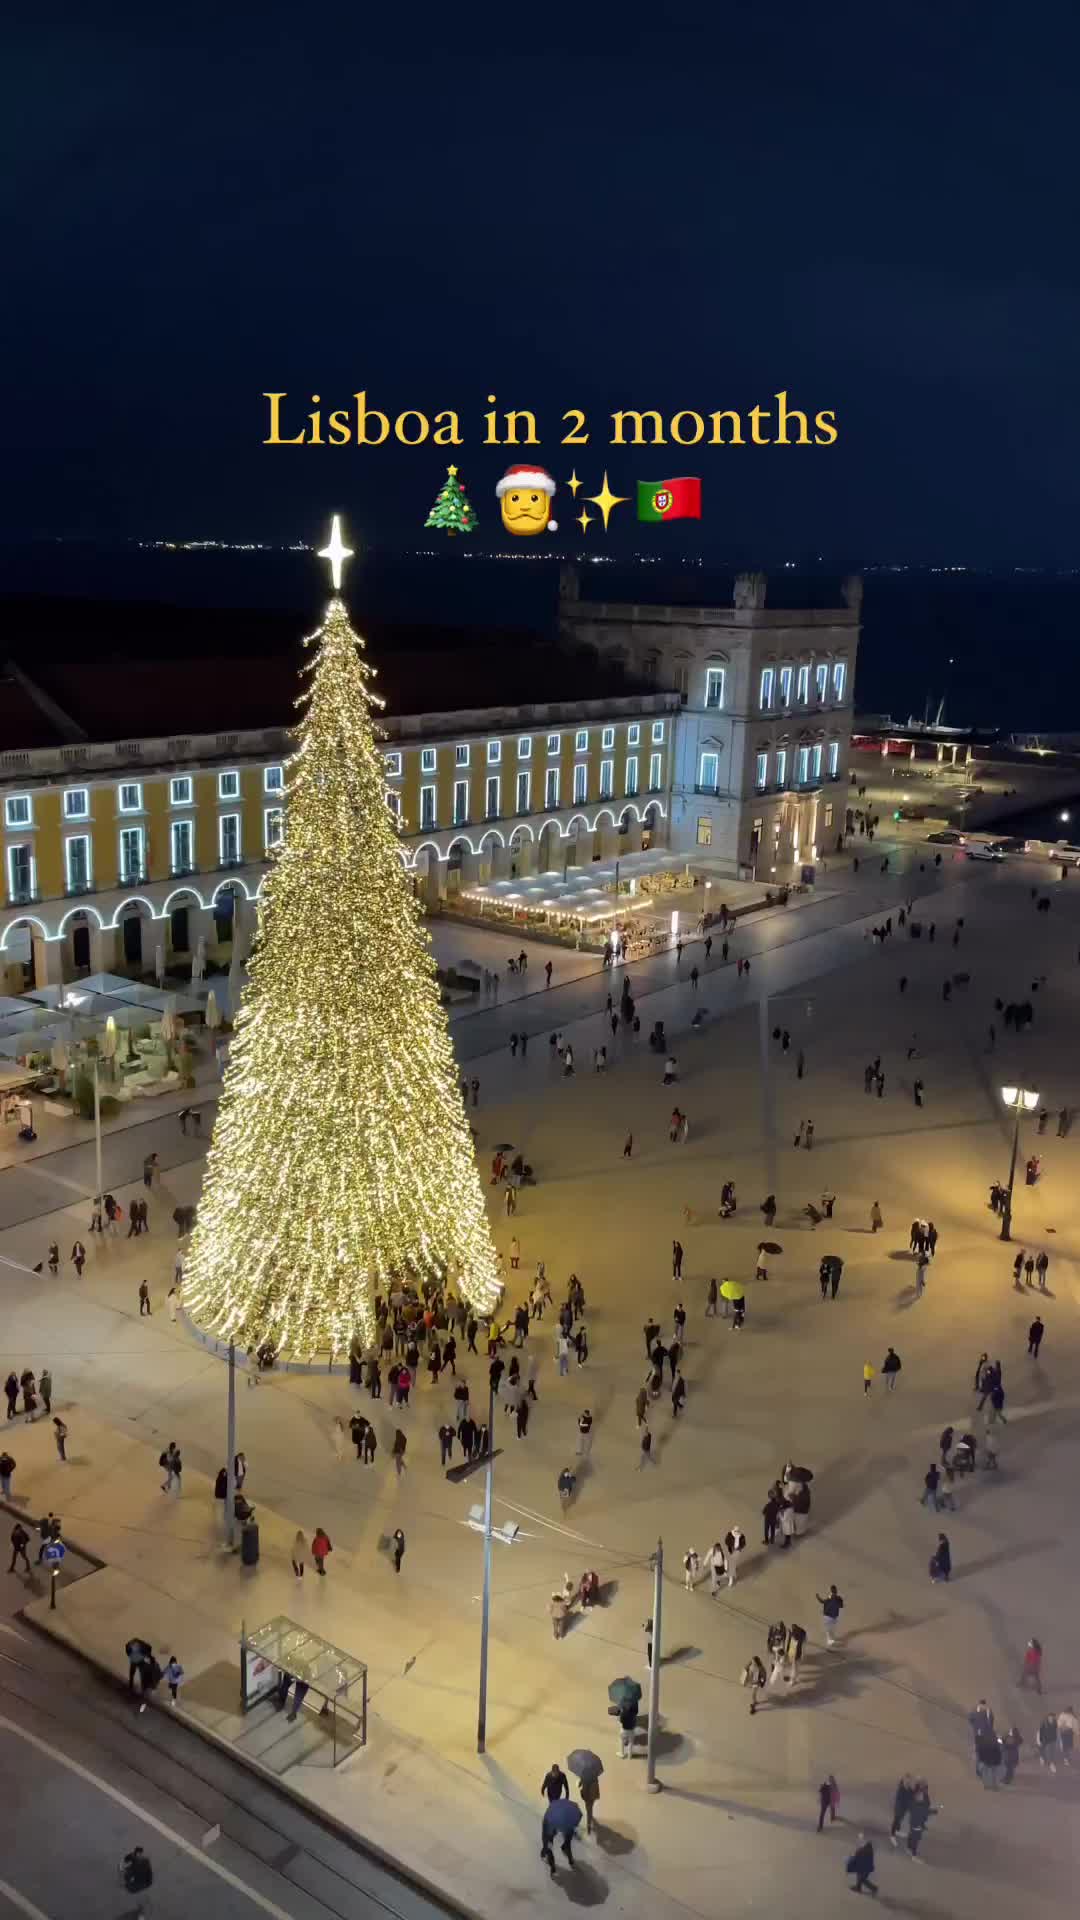 Lisbon at Christmas: Sparkling Streets & Festive Cheer